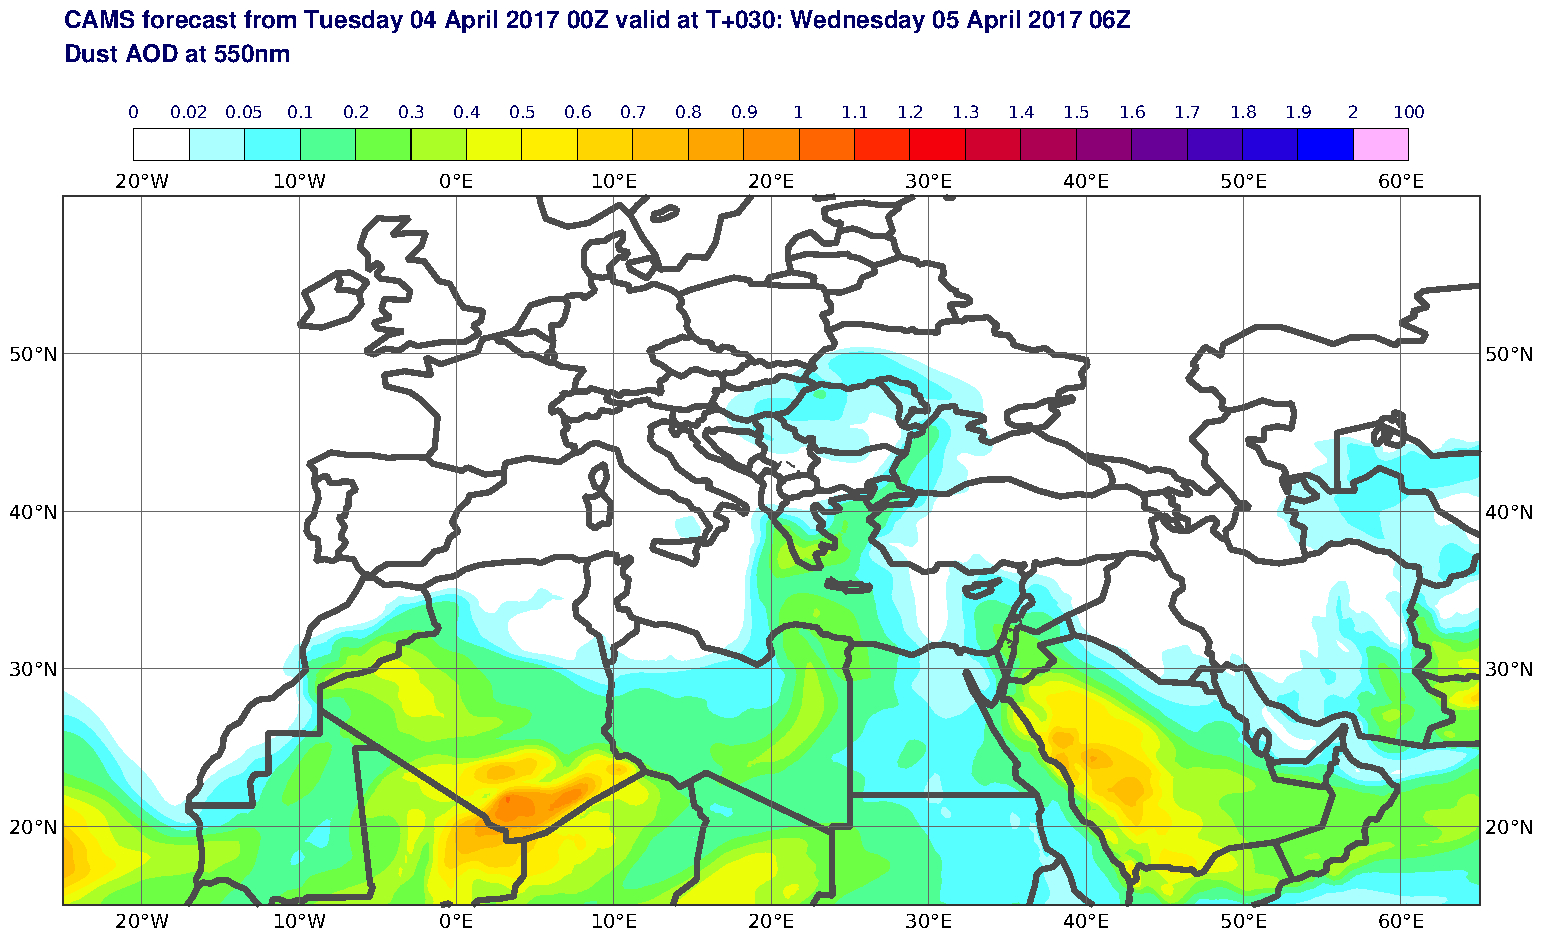 Dust AOD at 550nm valid at T30 - 2017-04-05 06:00